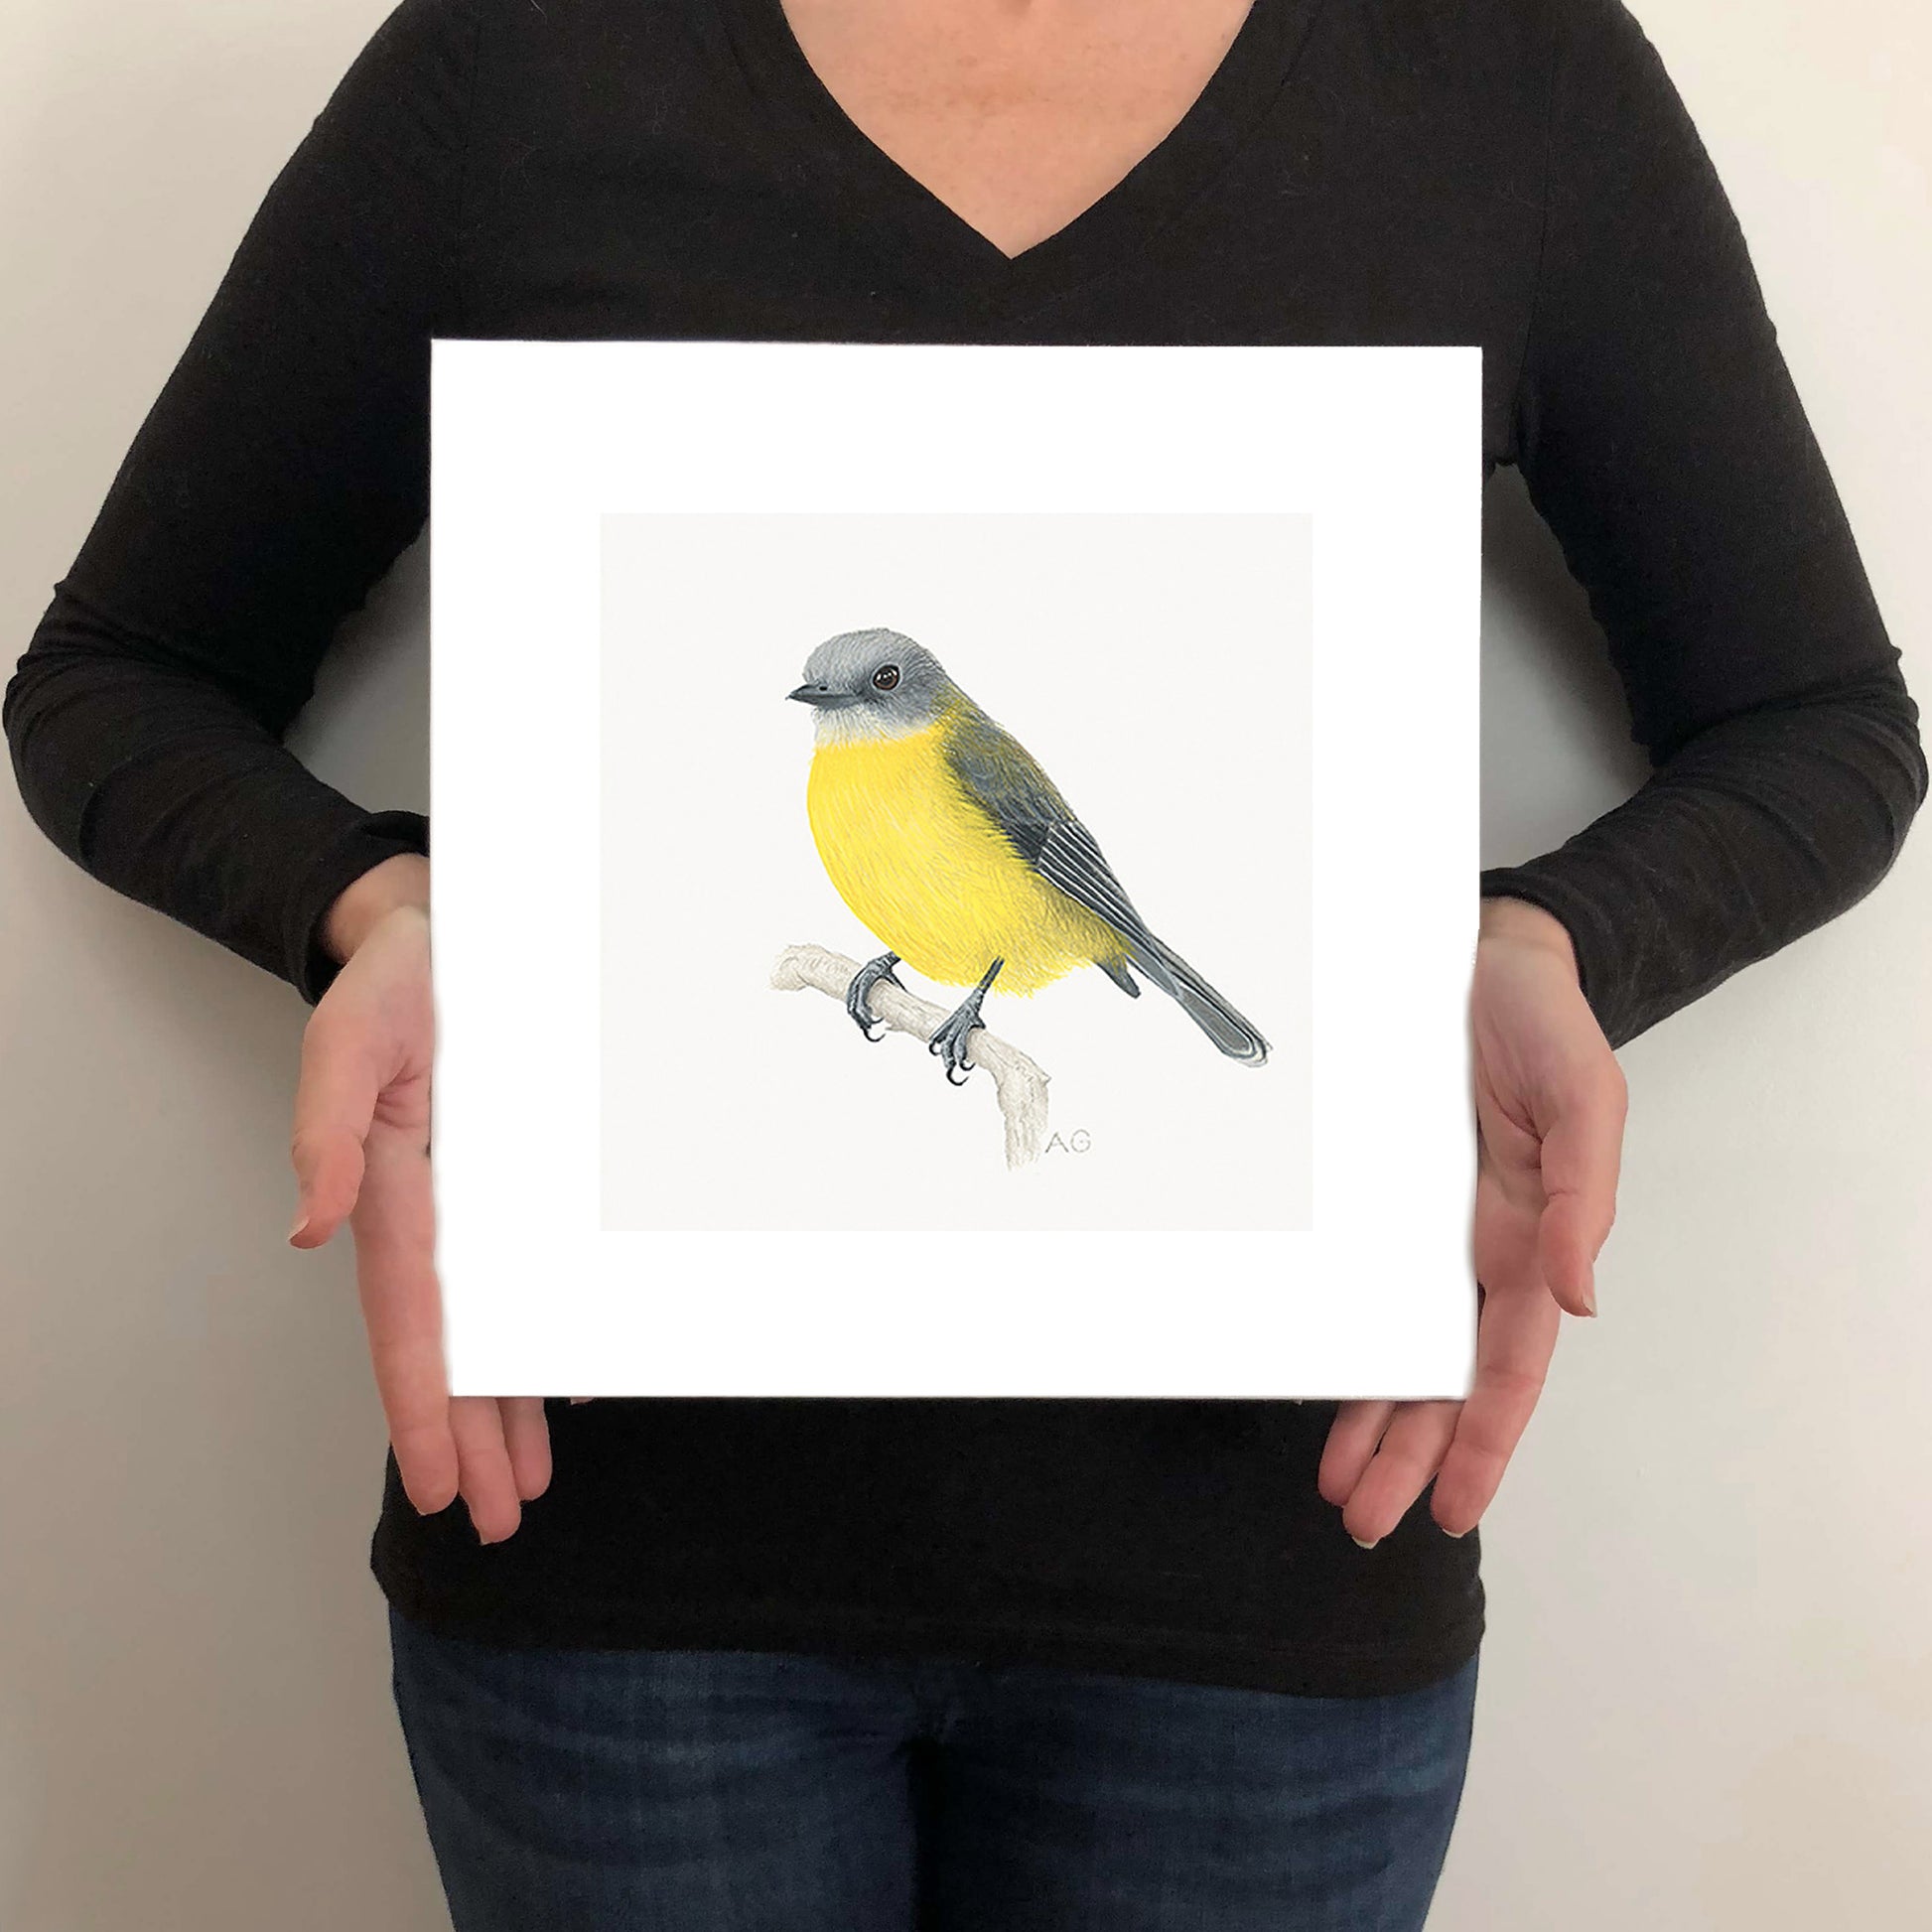 Fine art print of an Eastern Yellow Robin by Amanda Gosse held by artist as size guide